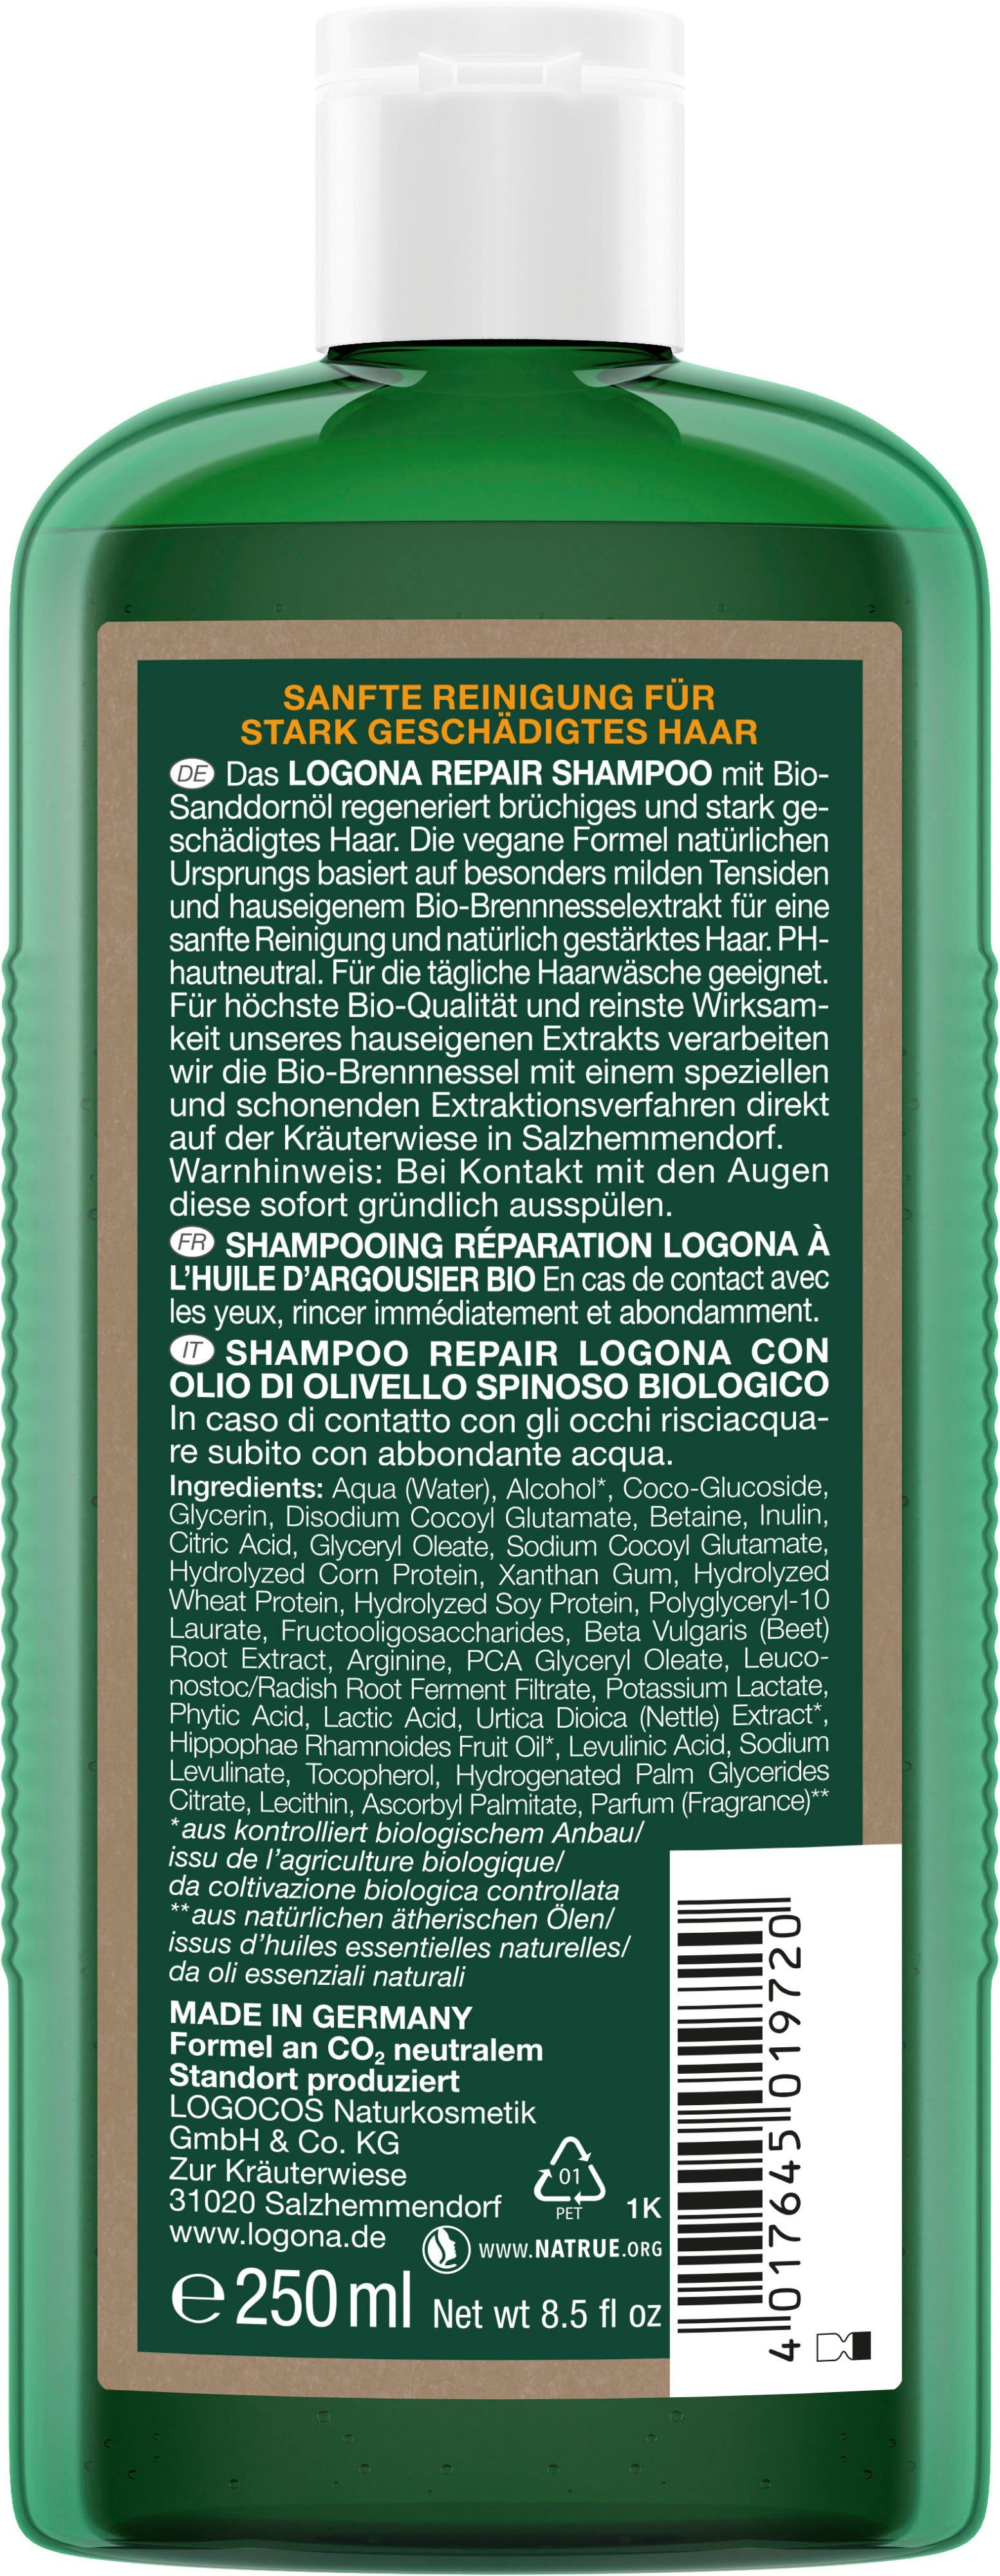 Bio-Sanddorn Shampoo LOGONA Haarshampoo Logona Repair&Pflege